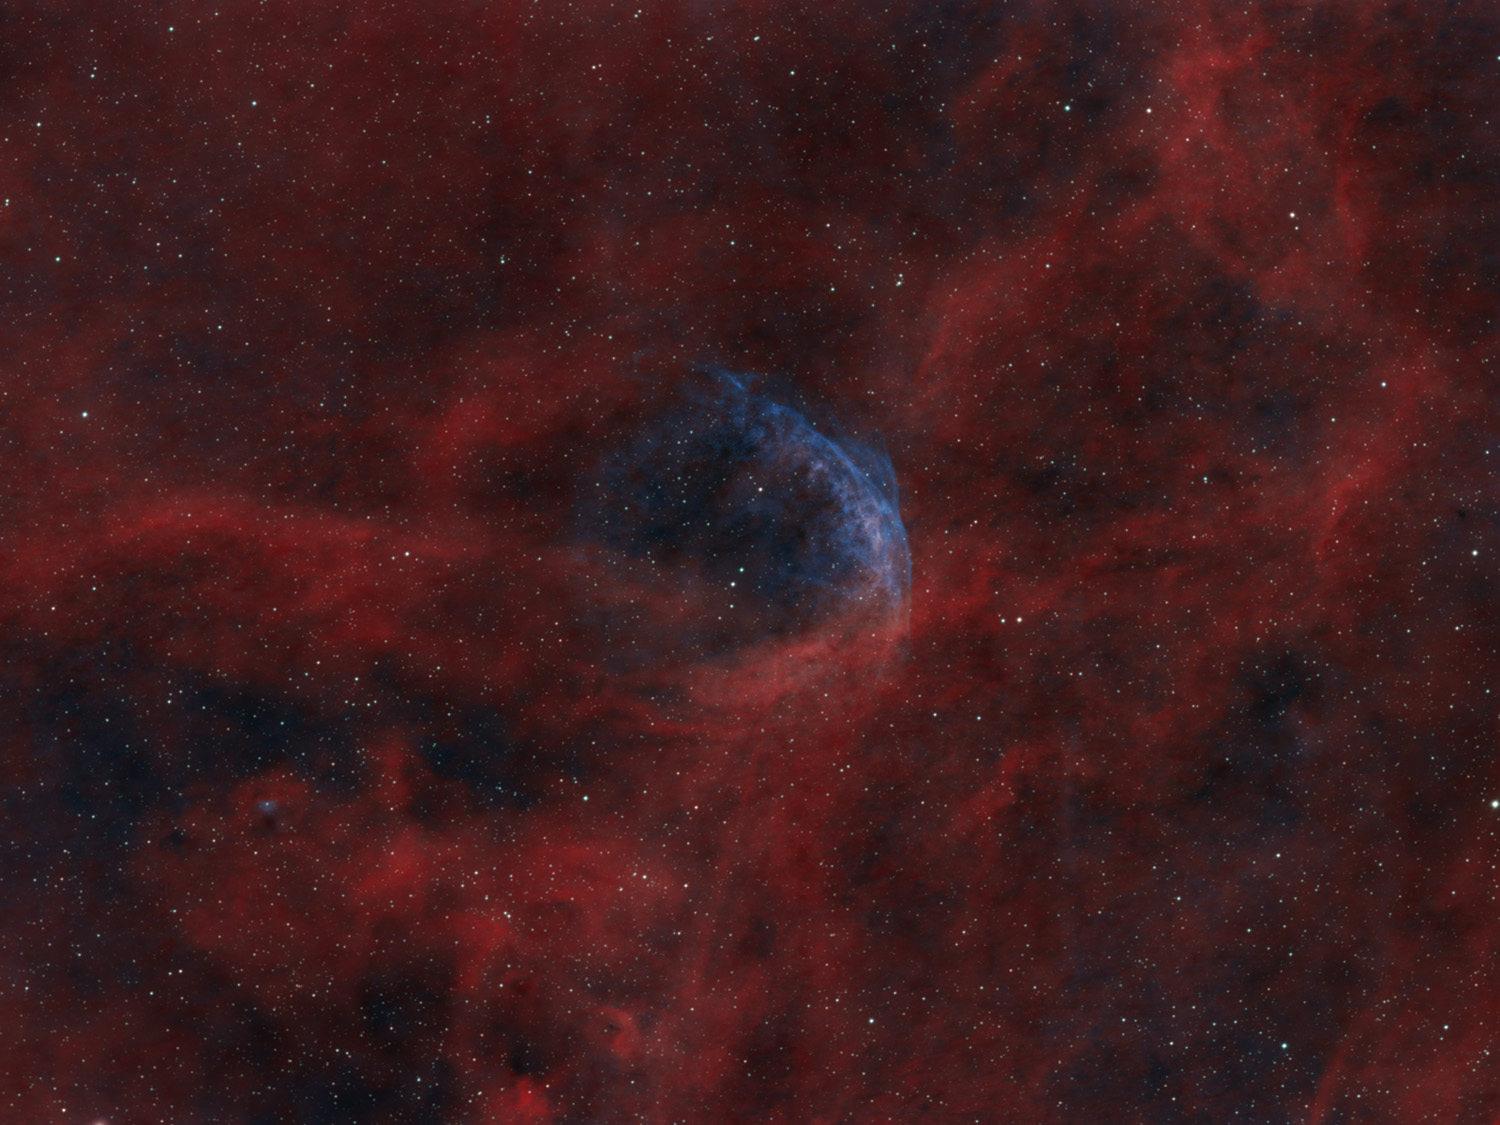 Wolf-Rayet-Nebula - WR 134 - meets Celestron RASA 8 - Experienced 